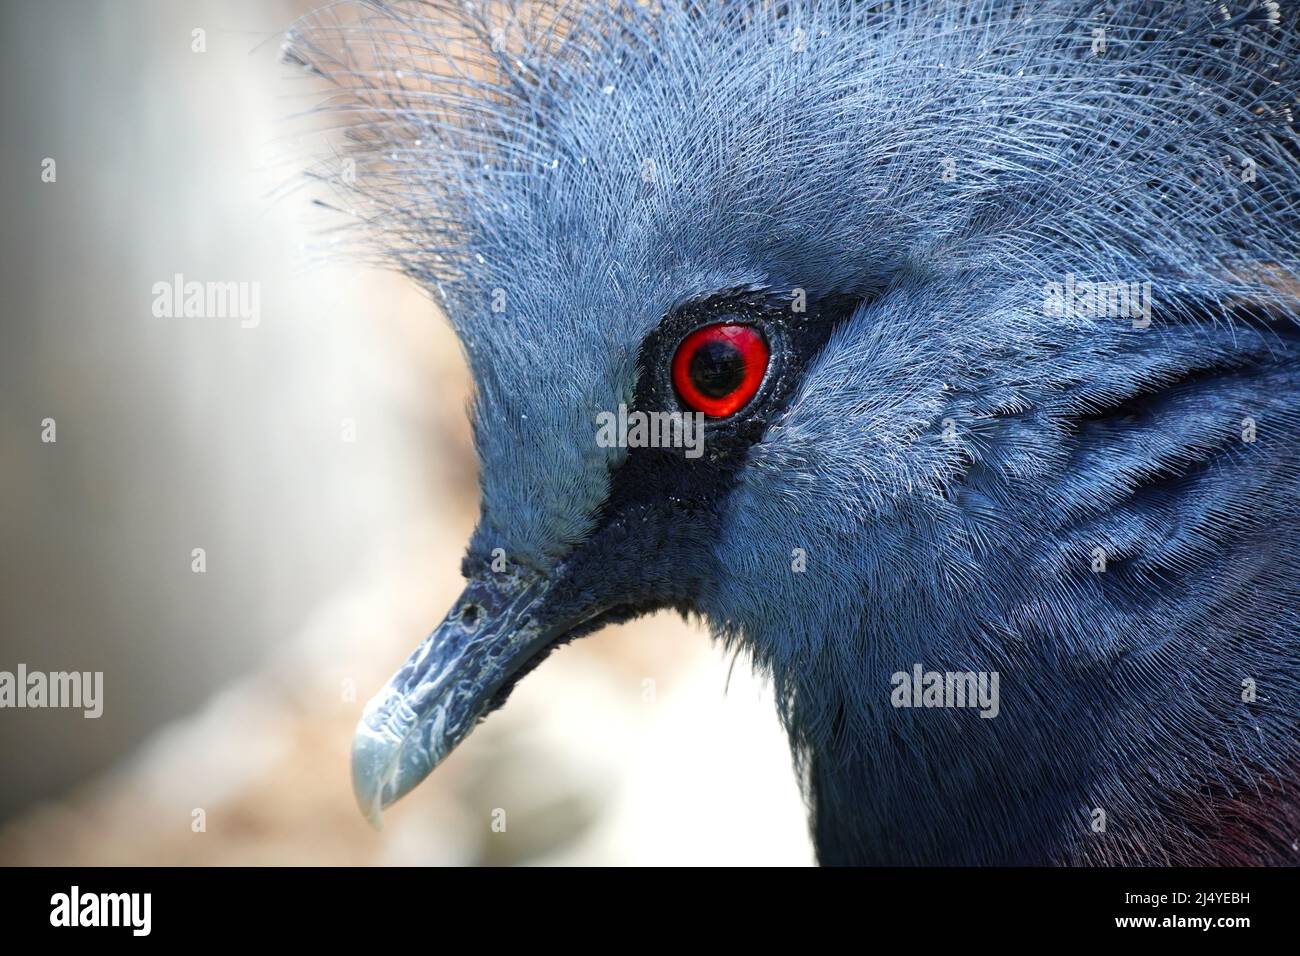 Primer plano del Ojo Rojo de una paloma coronada de Victoria (Goura victoria) Foto de stock